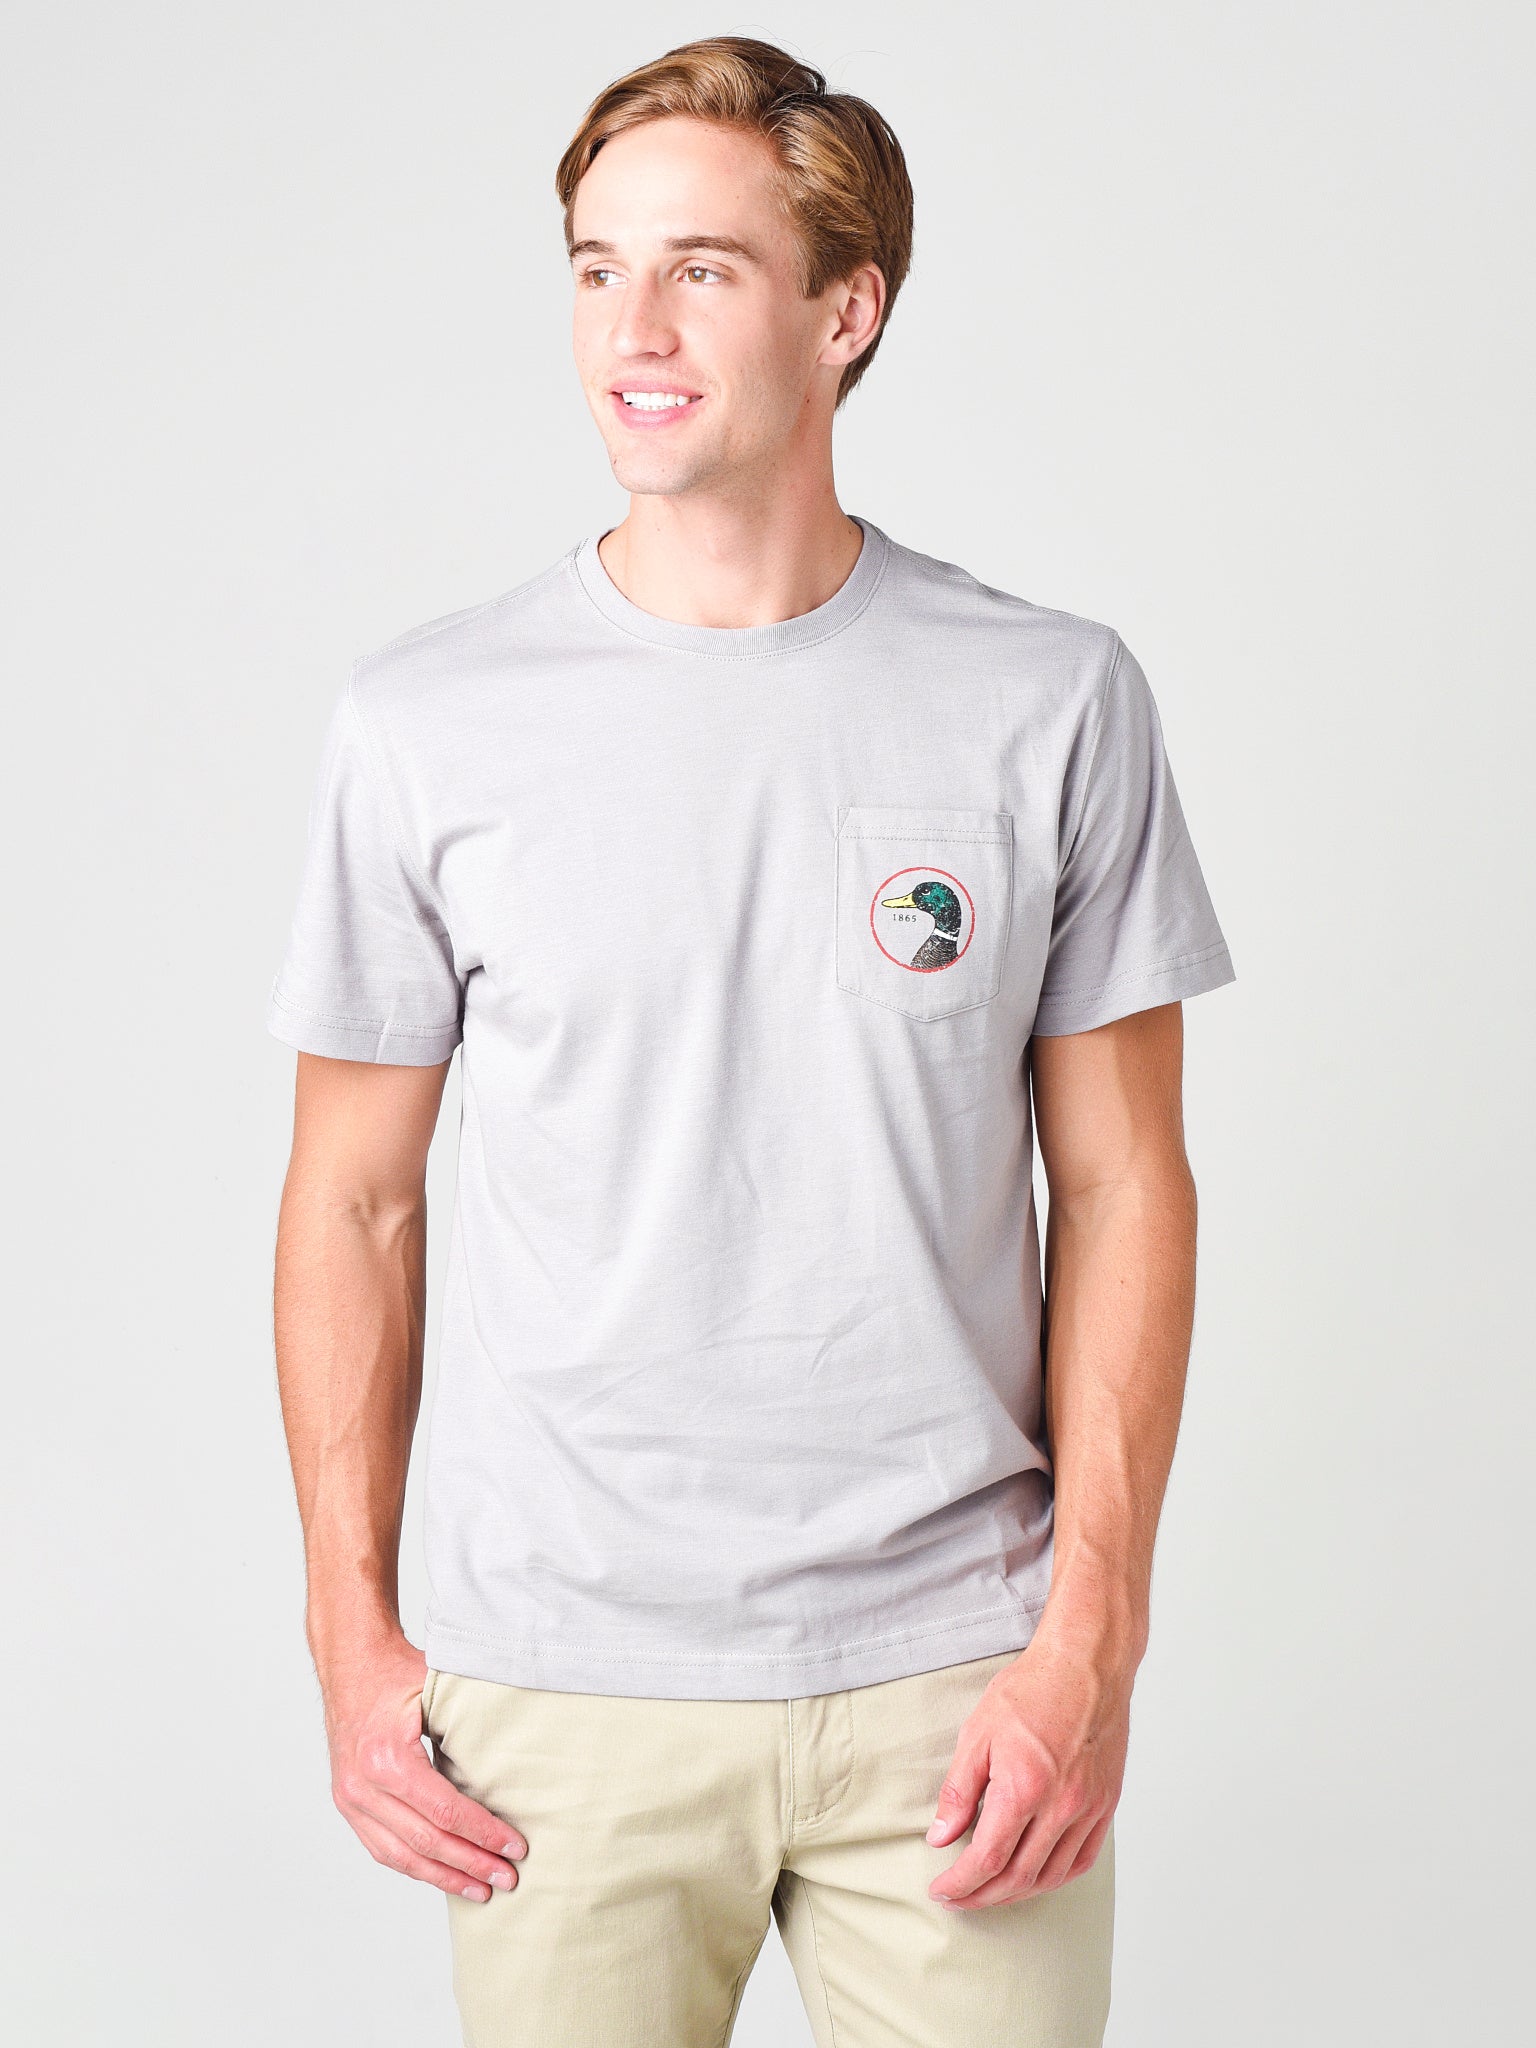 Duck Head Logo Short Sleeve T-Shirt - Harbor Blue - Nowells Clothiers